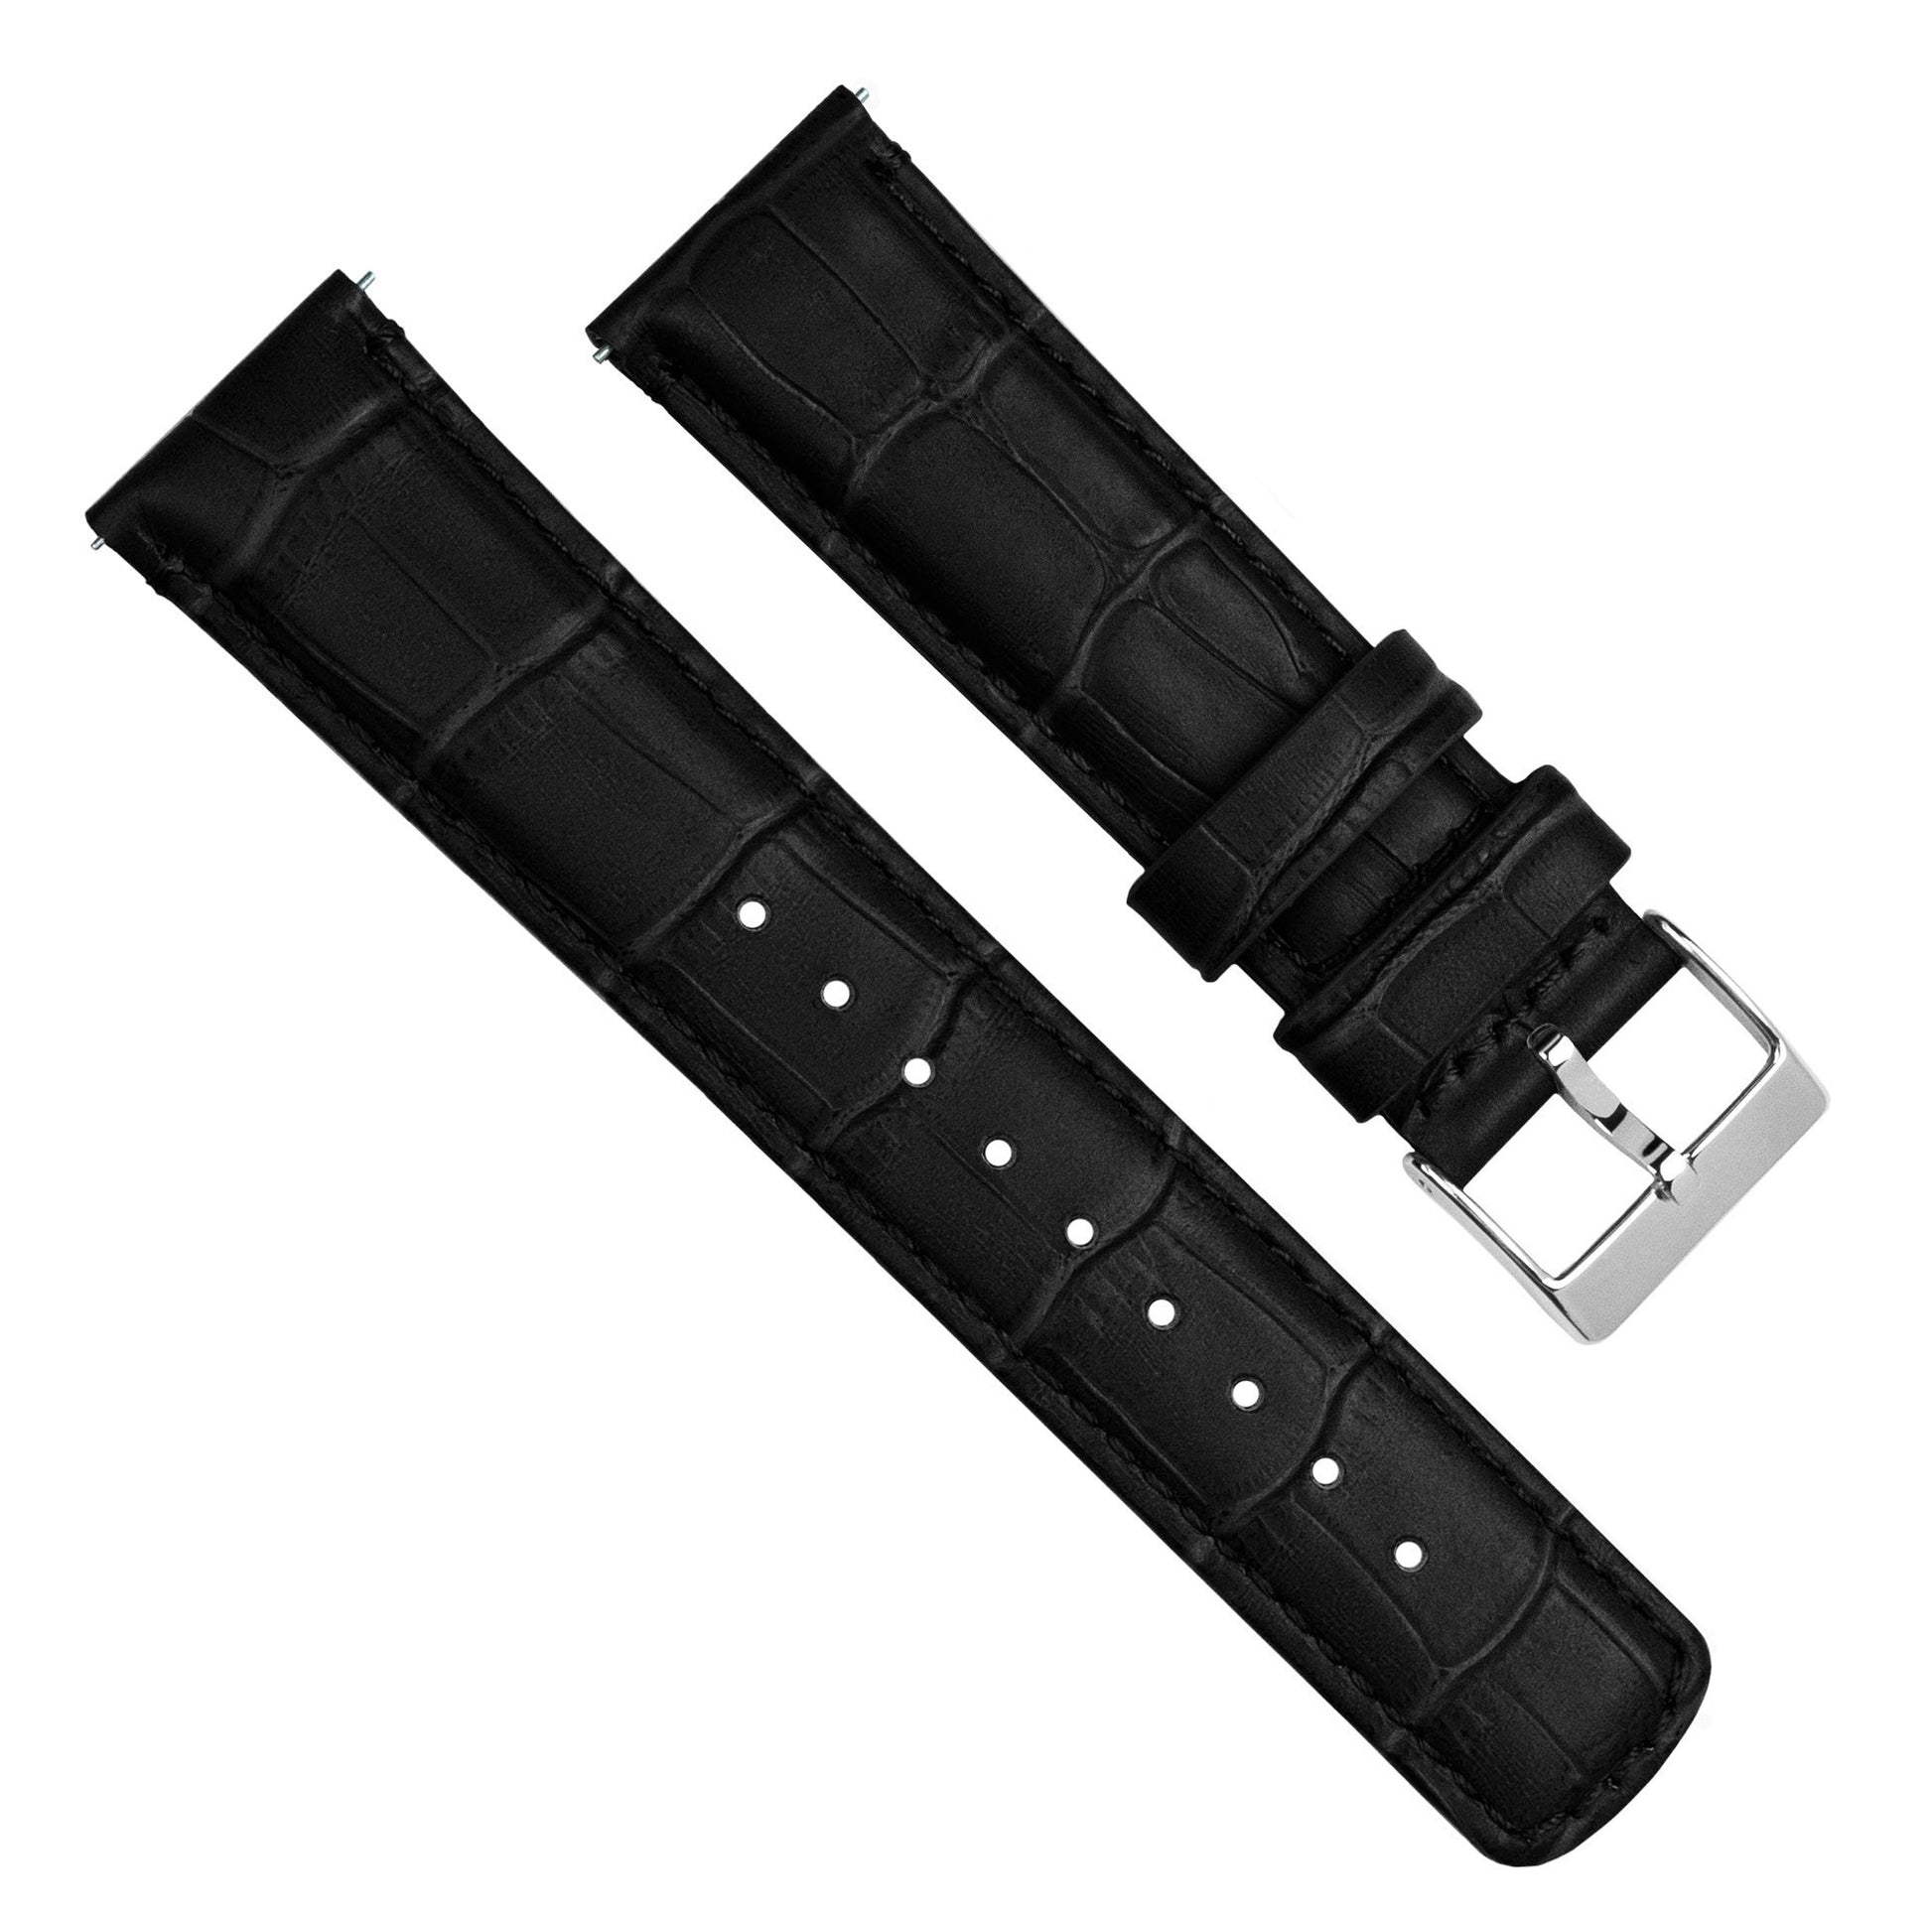 Moto 360 Gen2 | Black Alligator Grain Leather - Barton Watch Bands